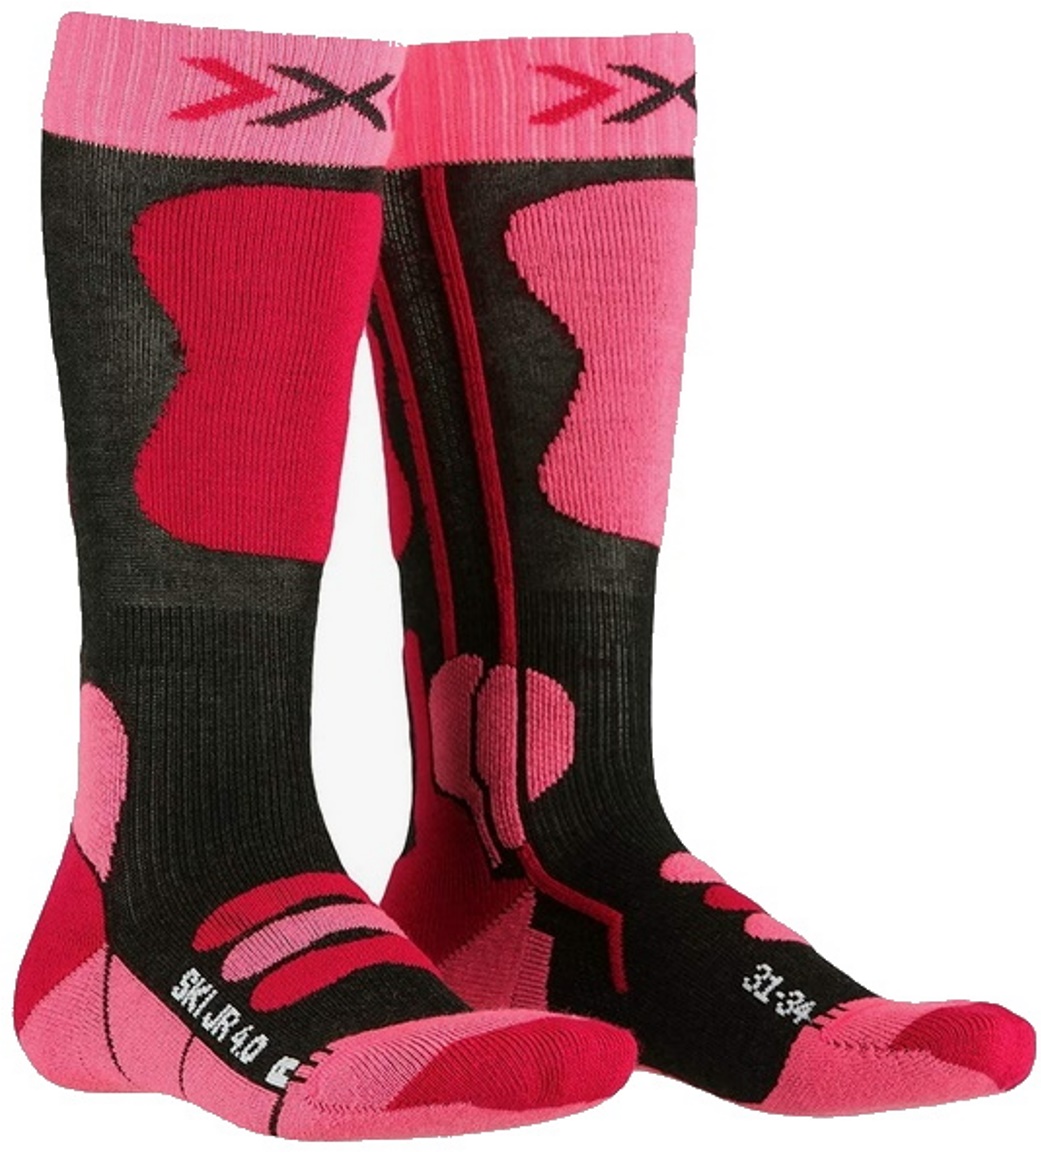 X-Socks Skisocken Ski Junior 4.0 pink